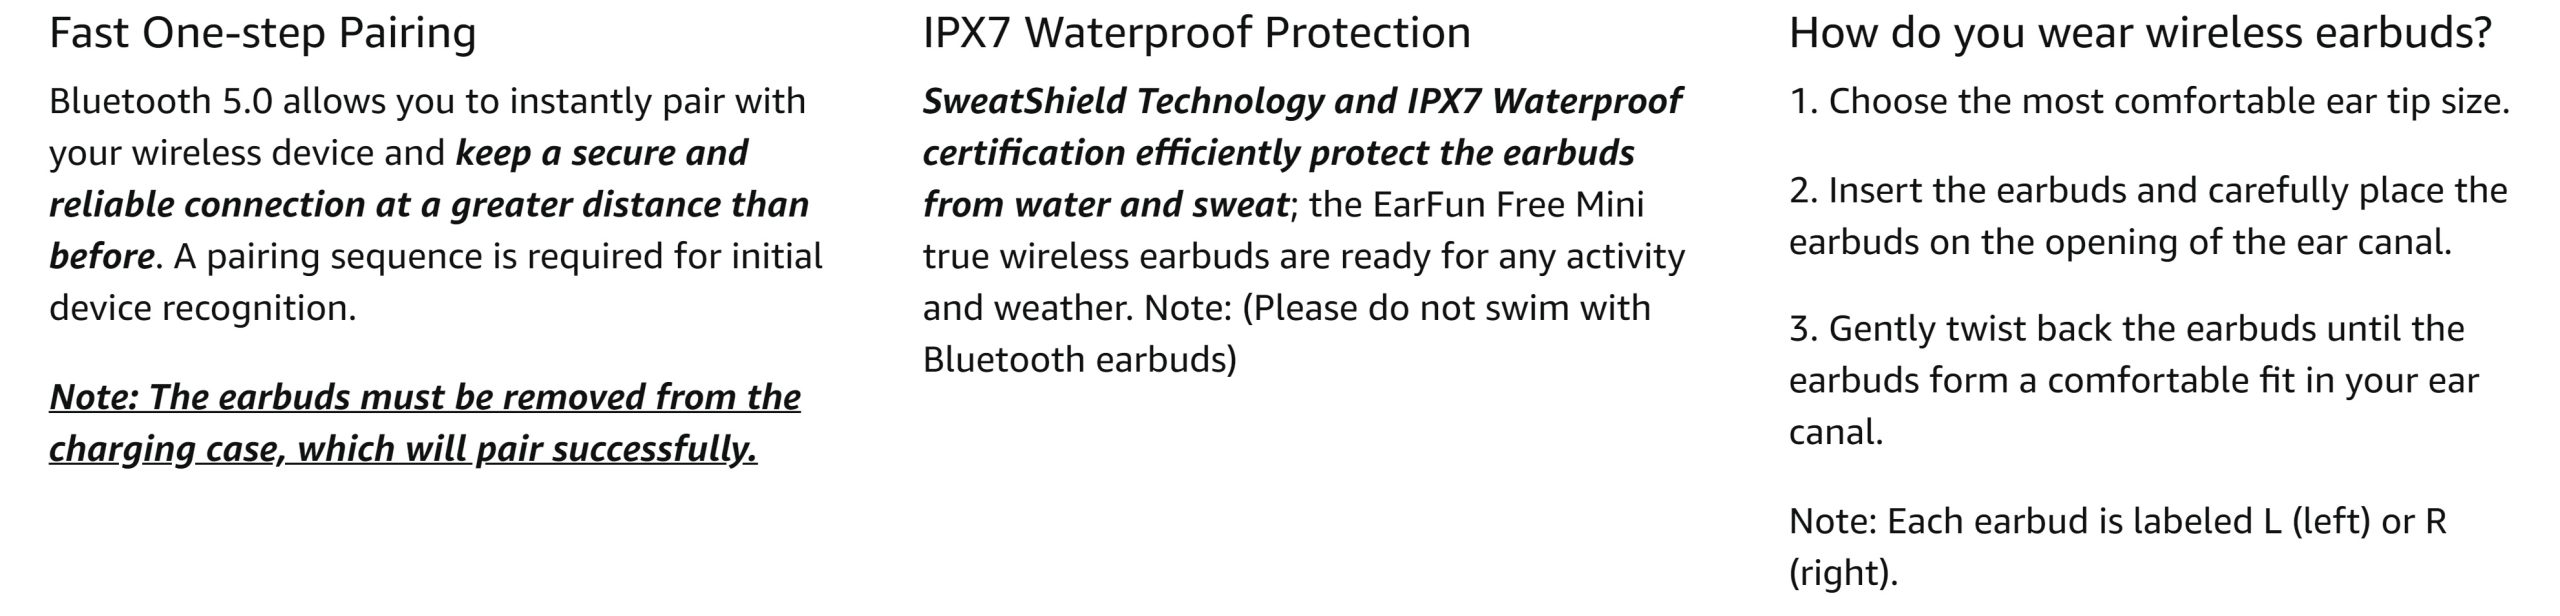 EarFun Free Mini Wireless Earbuds with IPX7 Waterproof